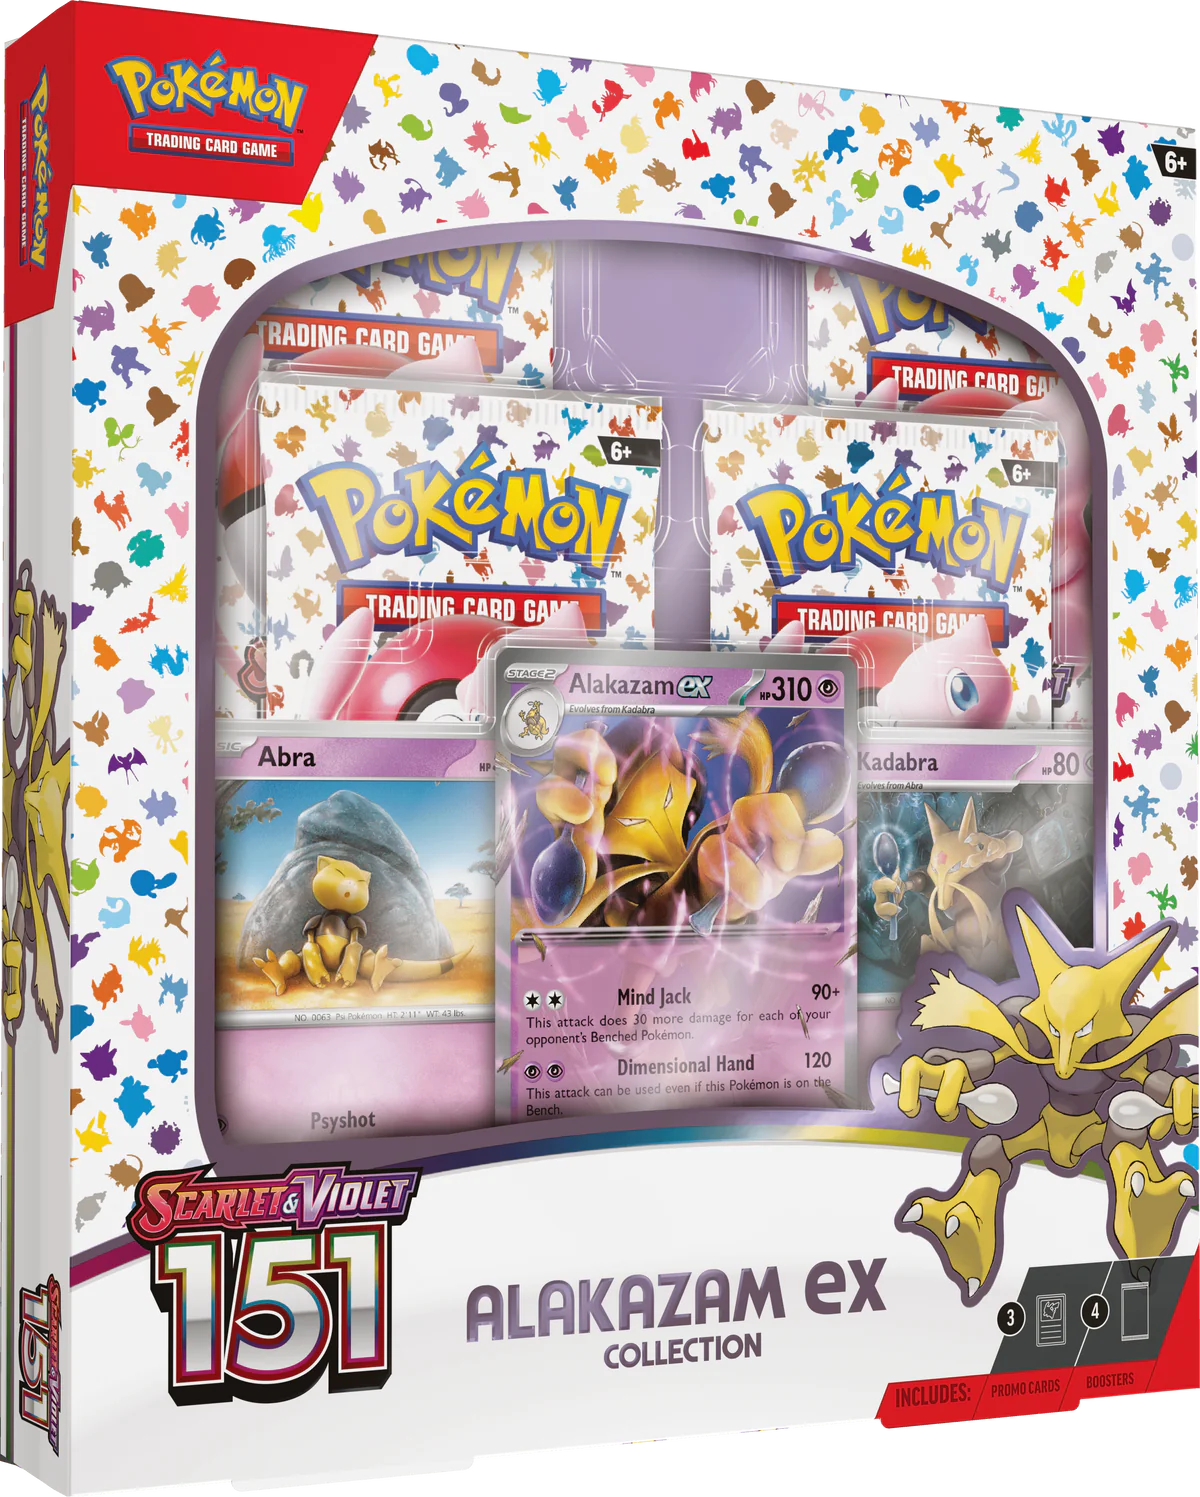 Pokémon TCG - Scarlet and Violet 151 Box Alakazam Ex